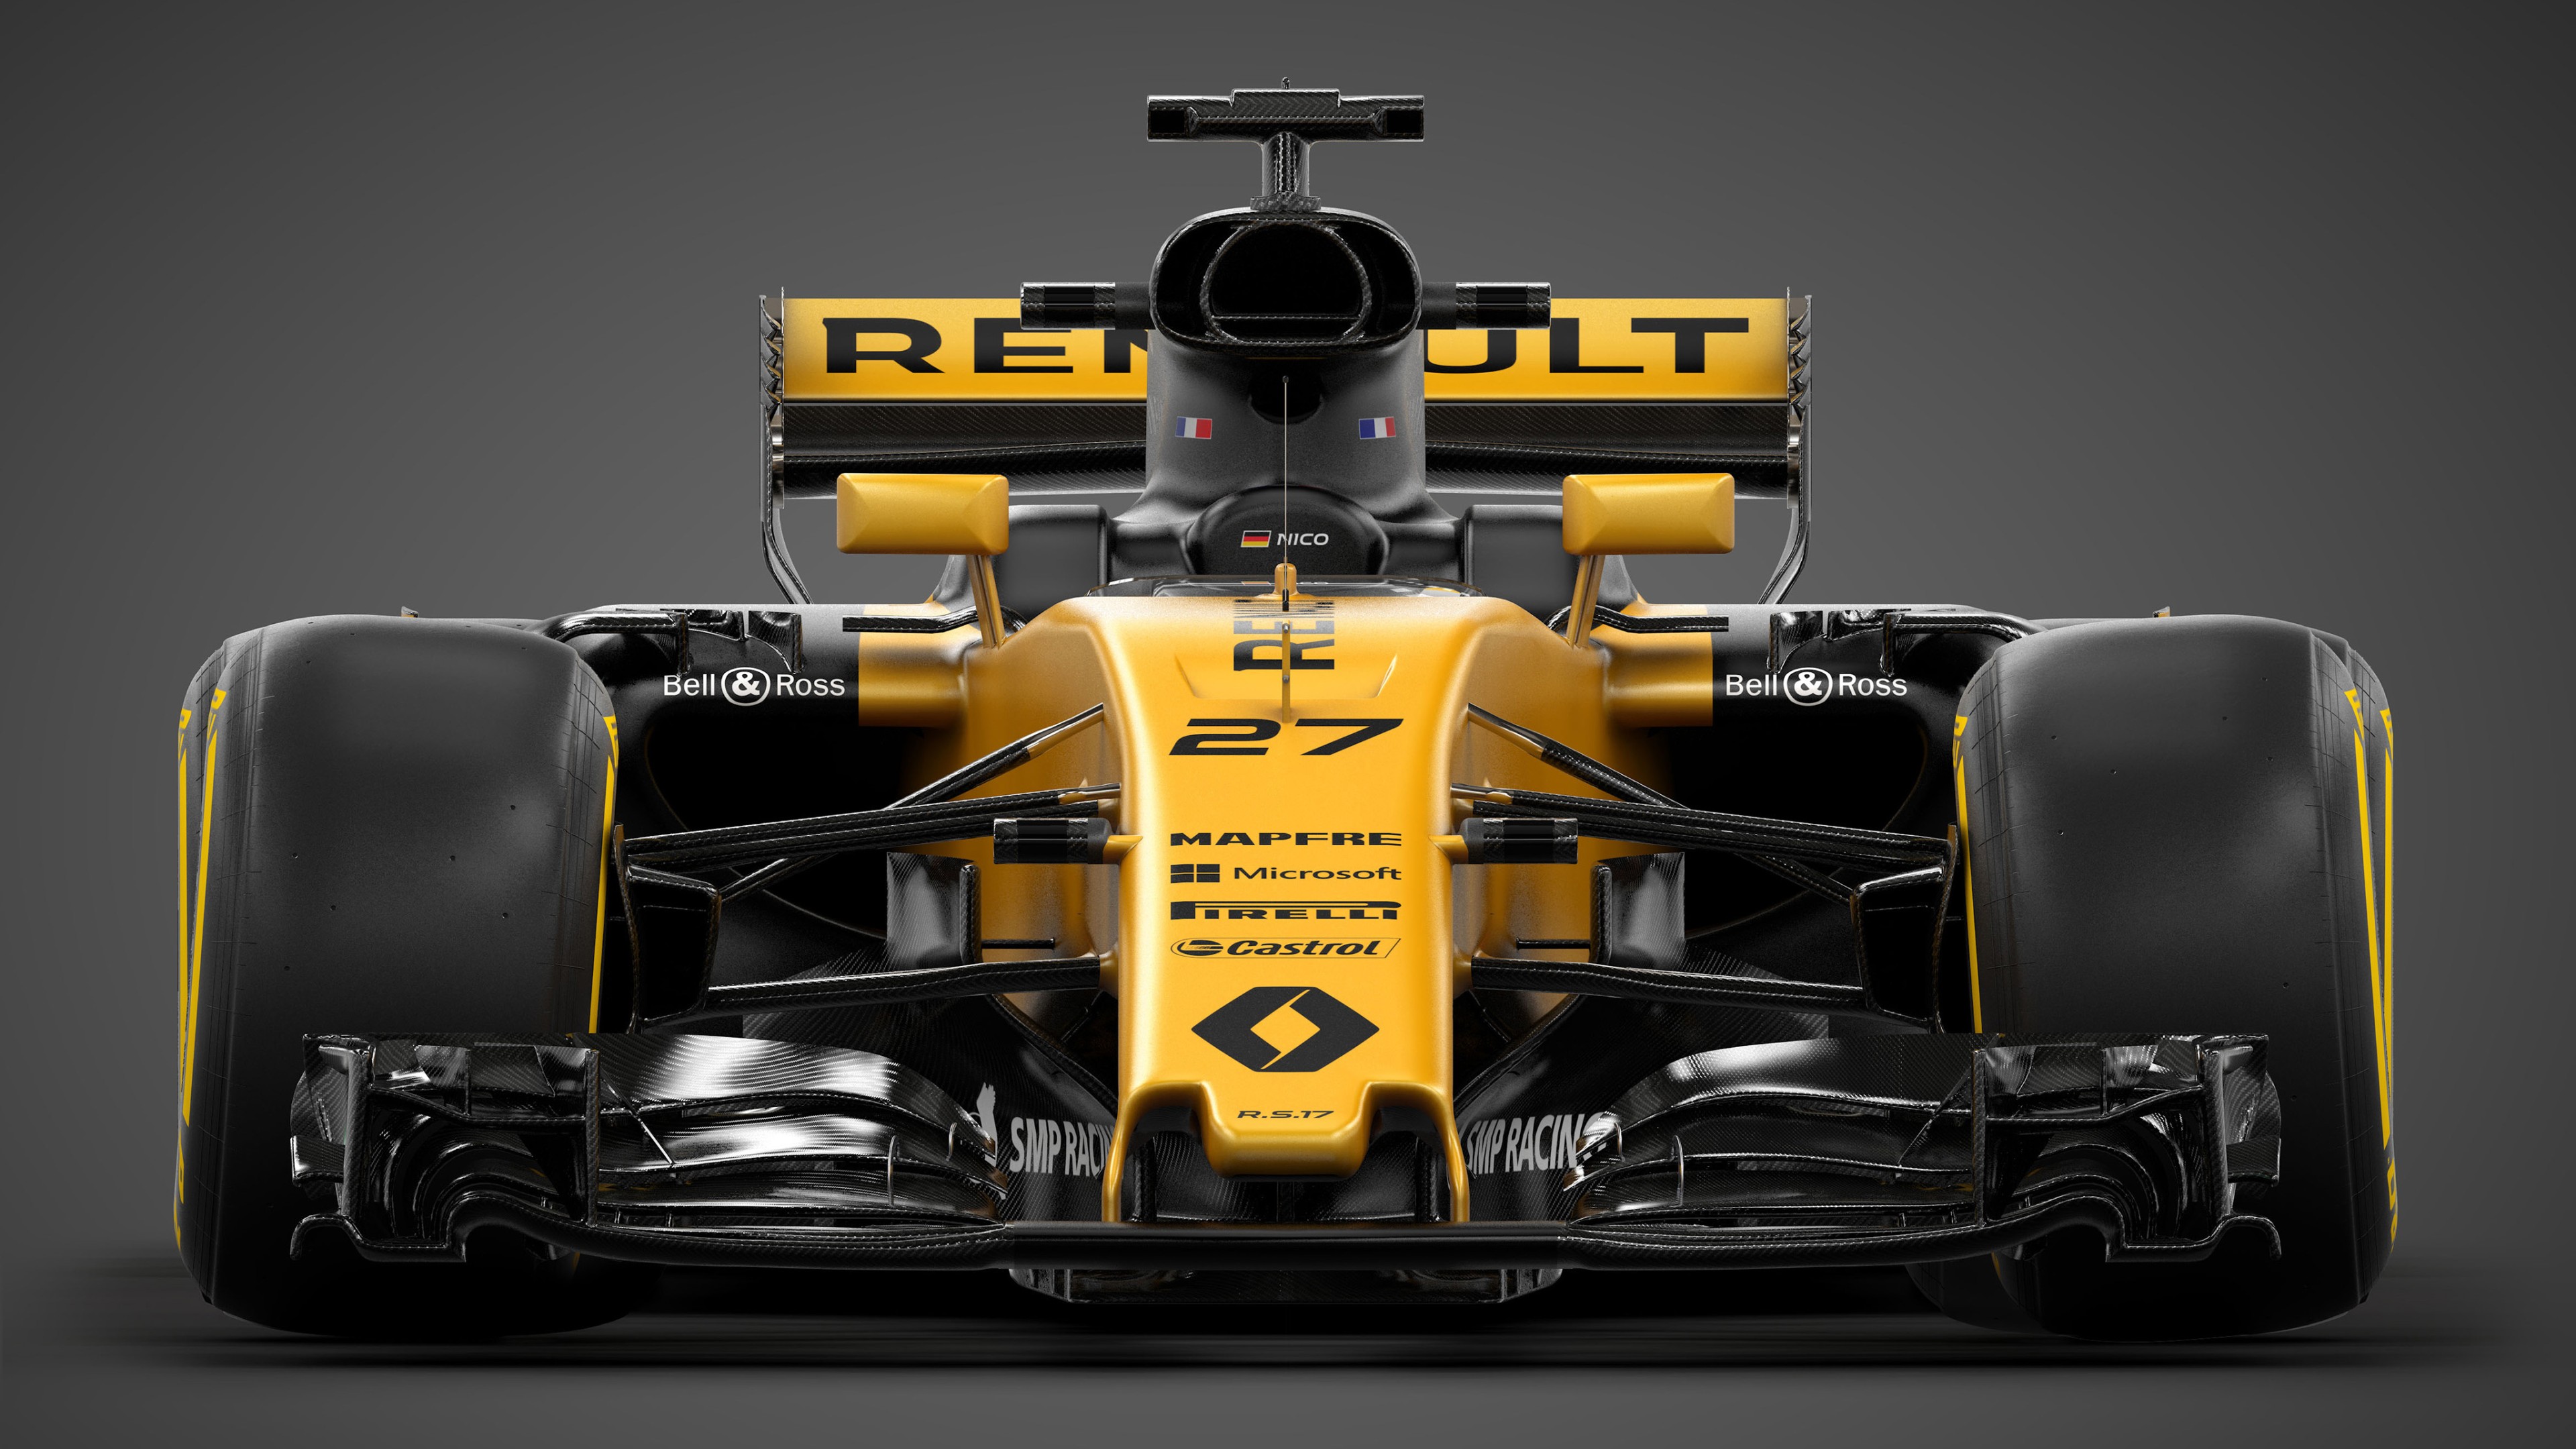 2017 Renault RS17 Formula 1 Car Wallpaper | HD Car ...